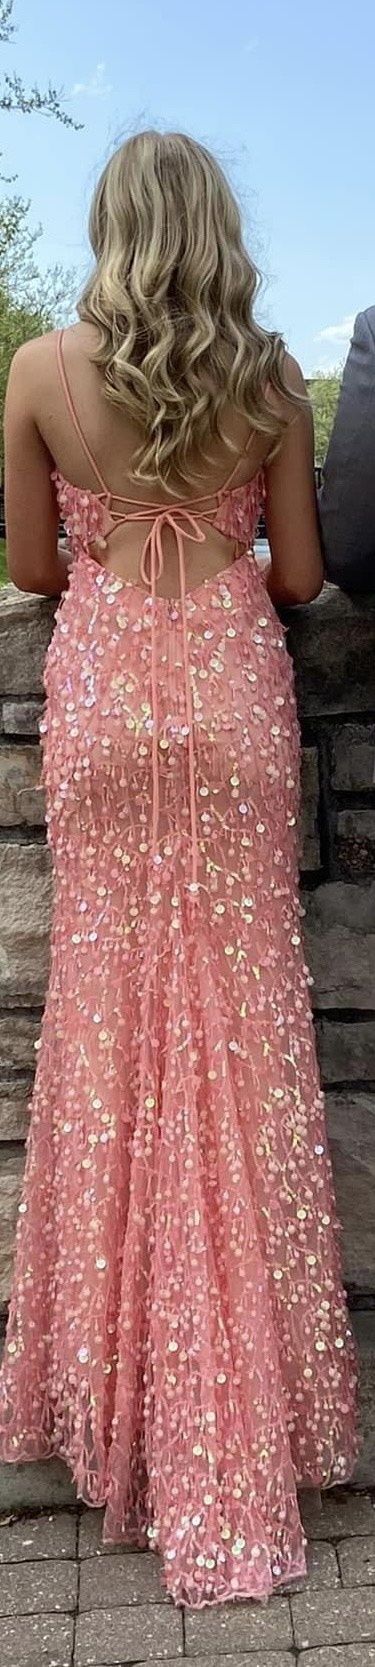 Style 51048 Tarik Ediz Size 2 Prom Plunge Pink A-line Dress on Queenly